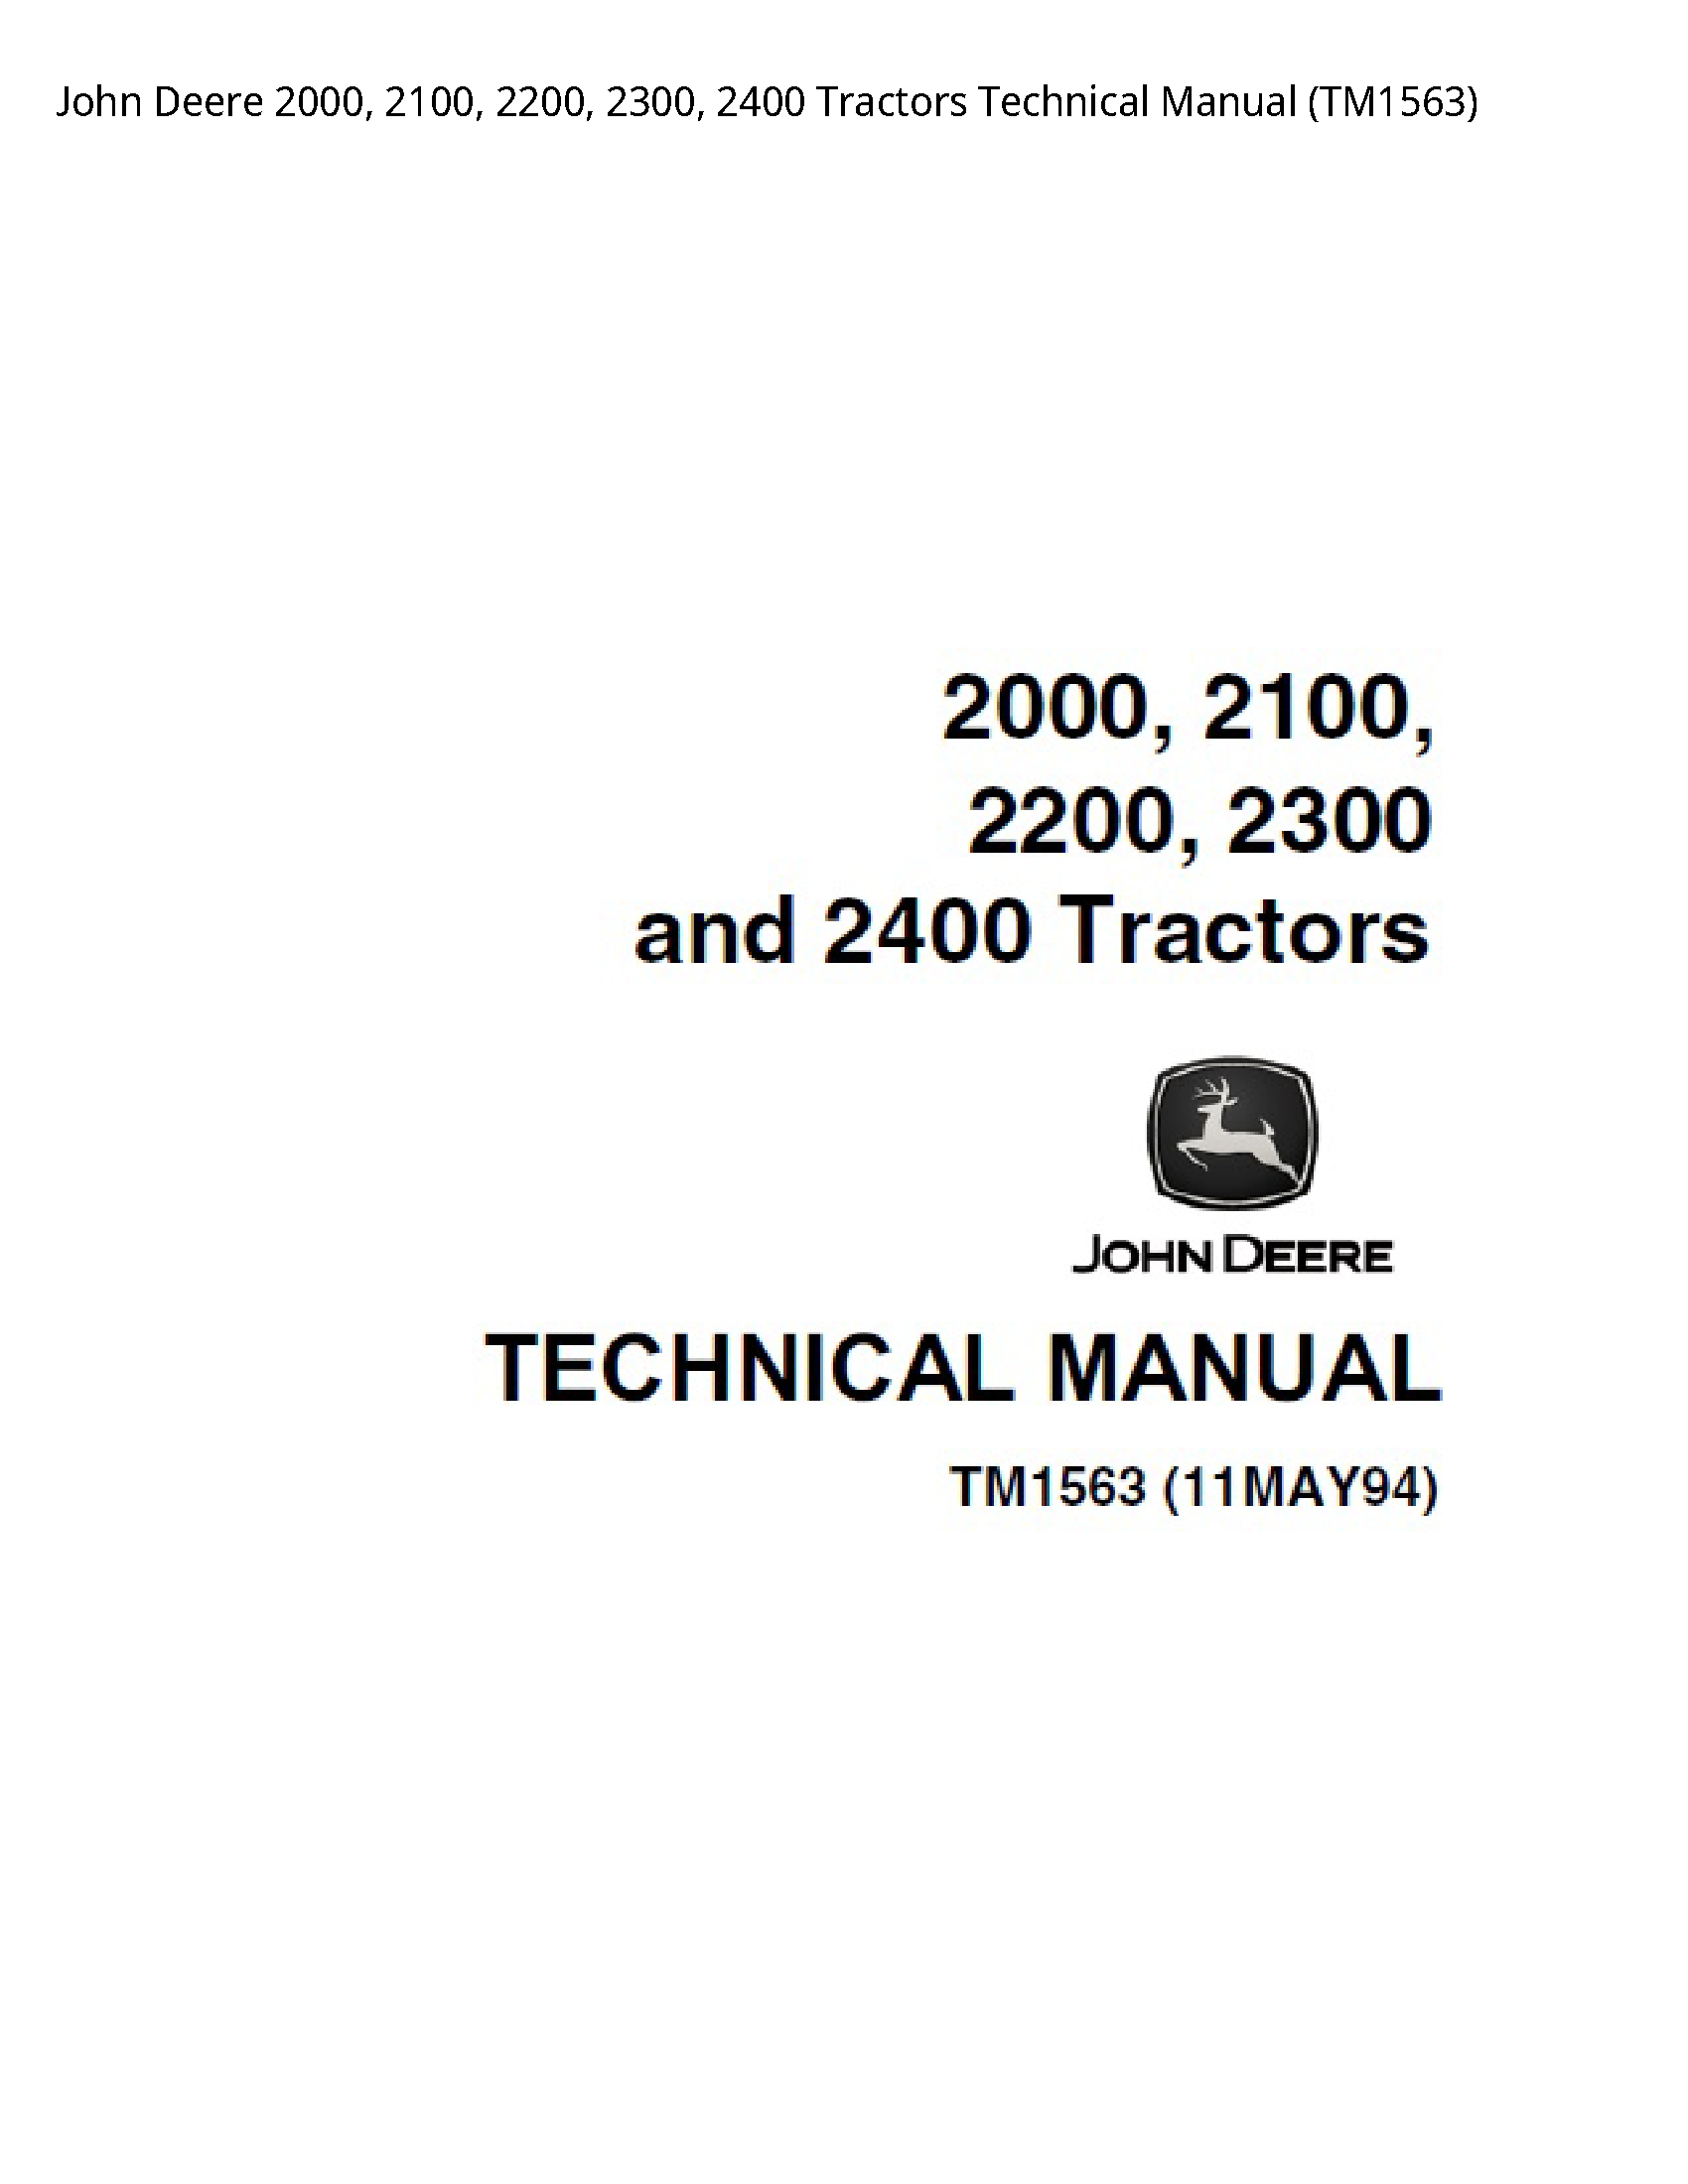 John Deere 2000 Tractors Technical manual